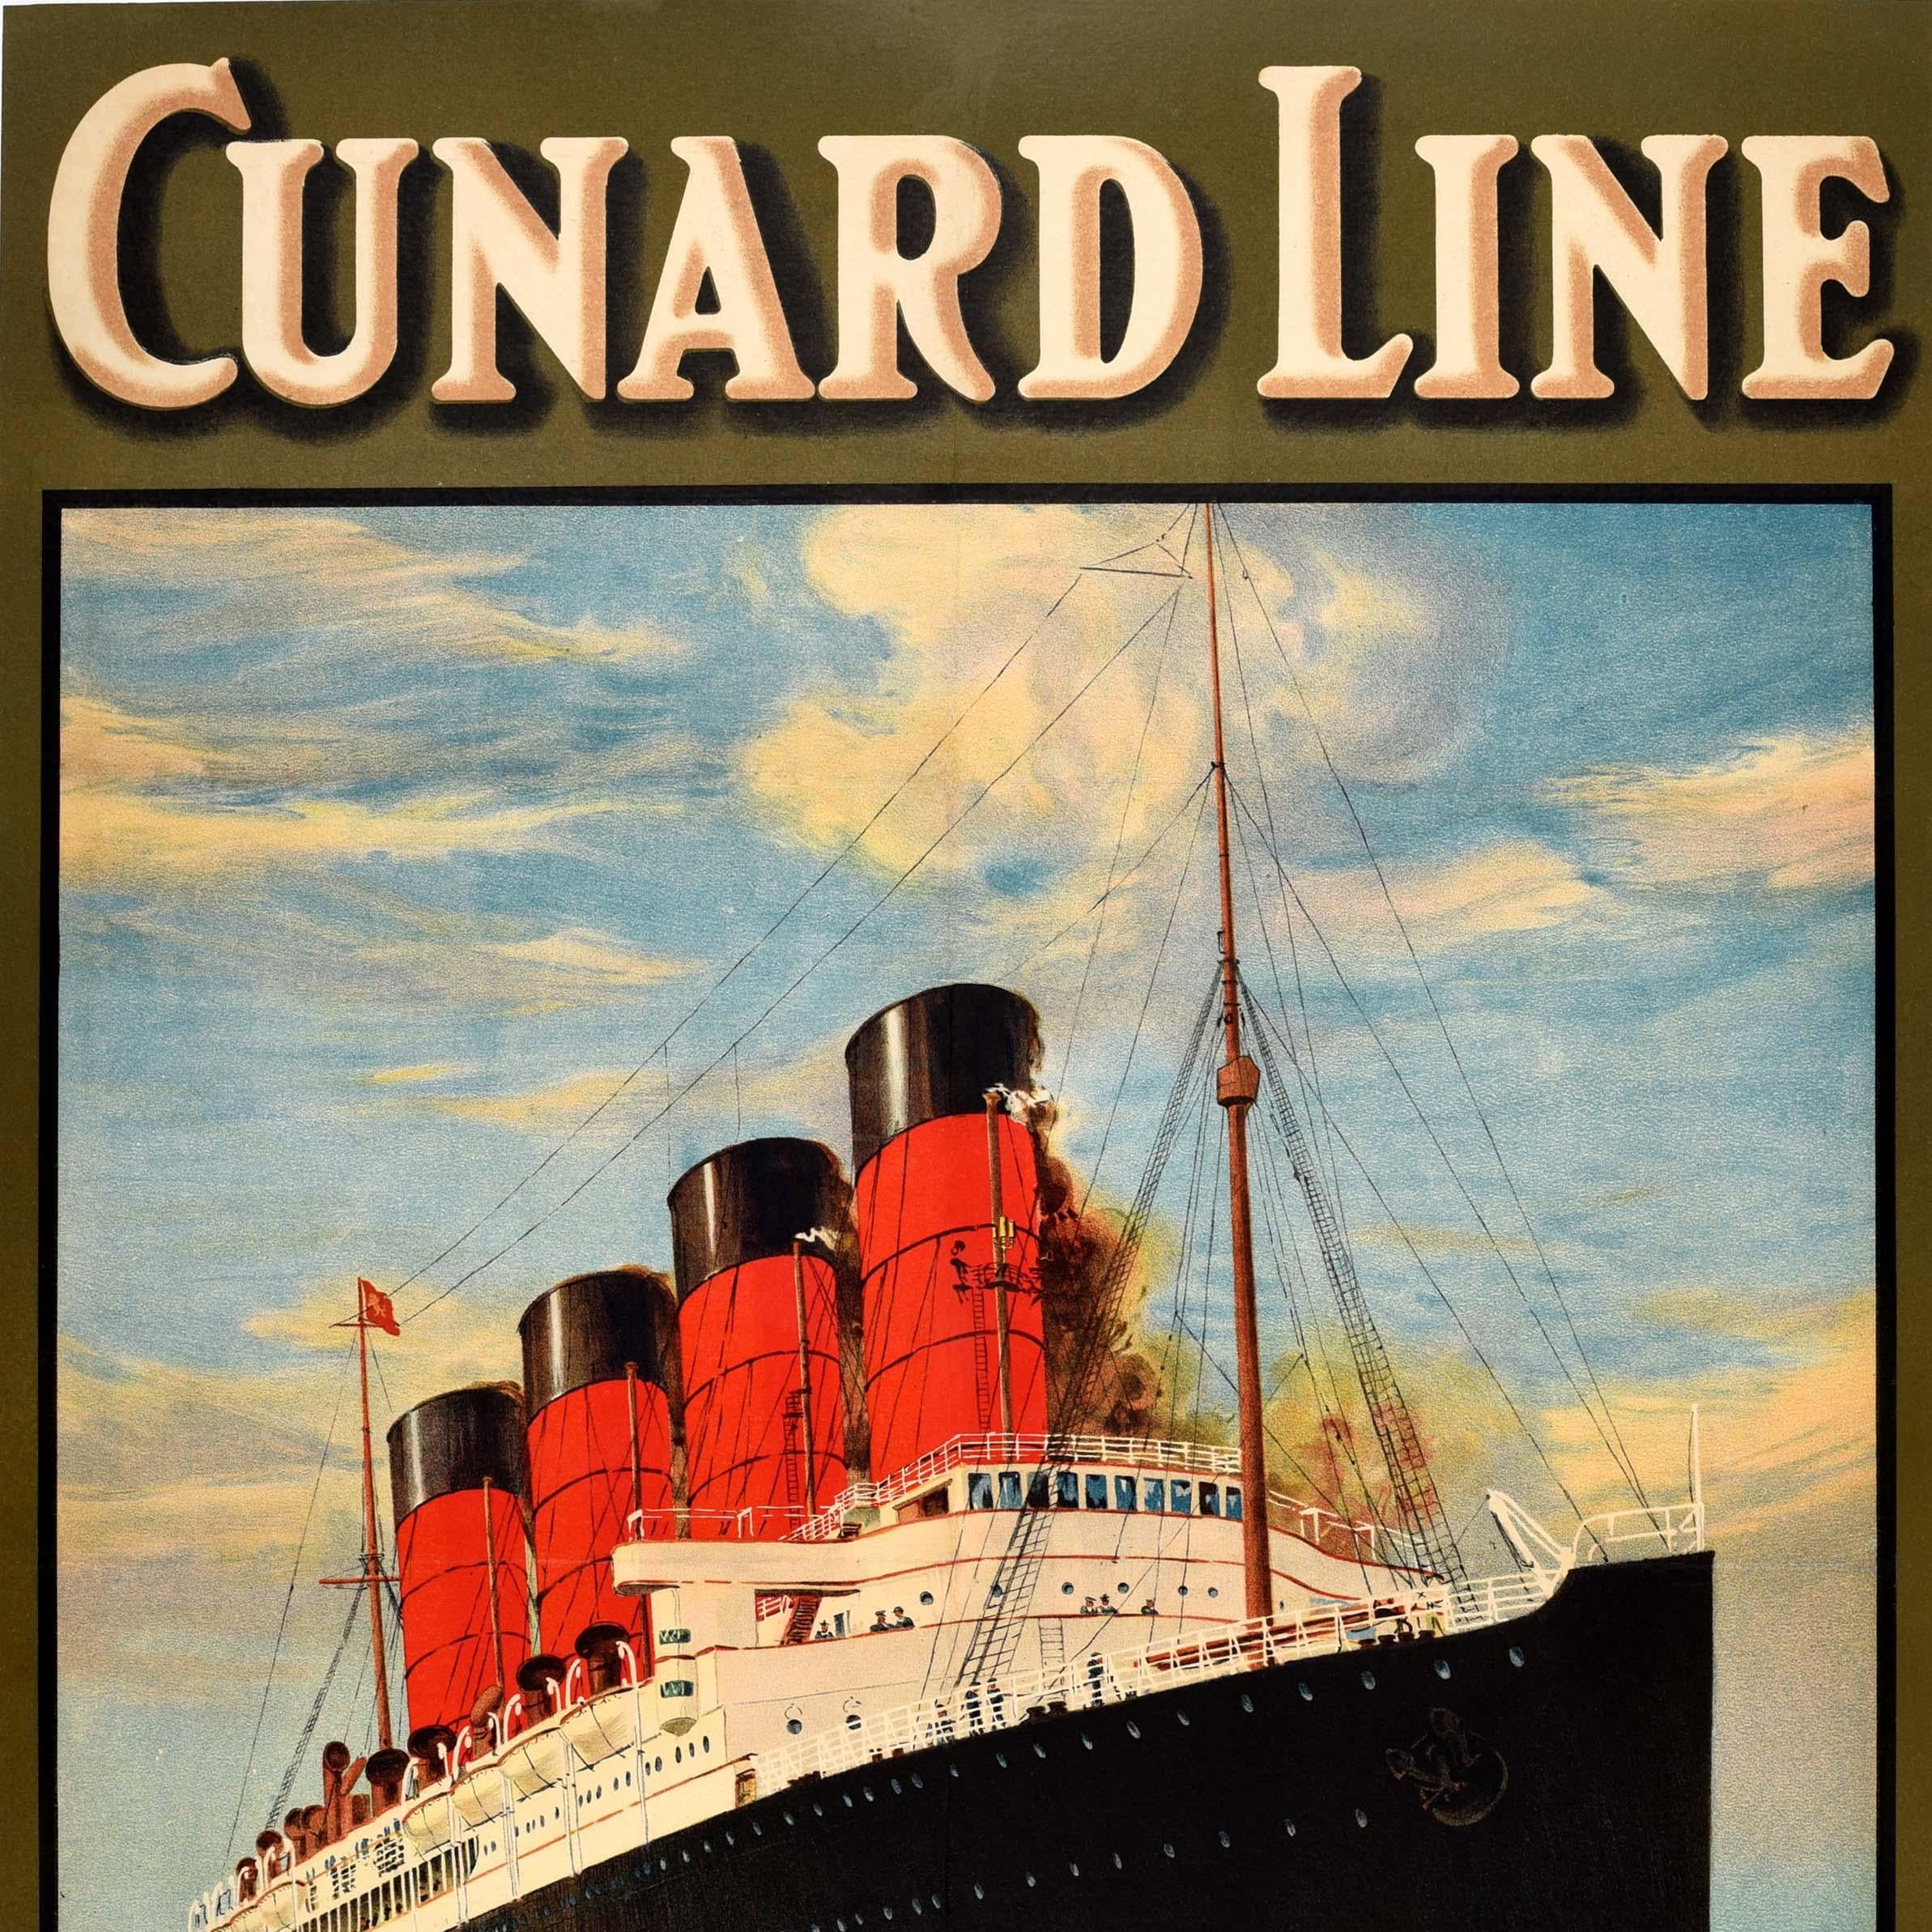 Britannique Affiche publicitaire originale de voyage vintage Cunard Line Europe America Cruise en vente